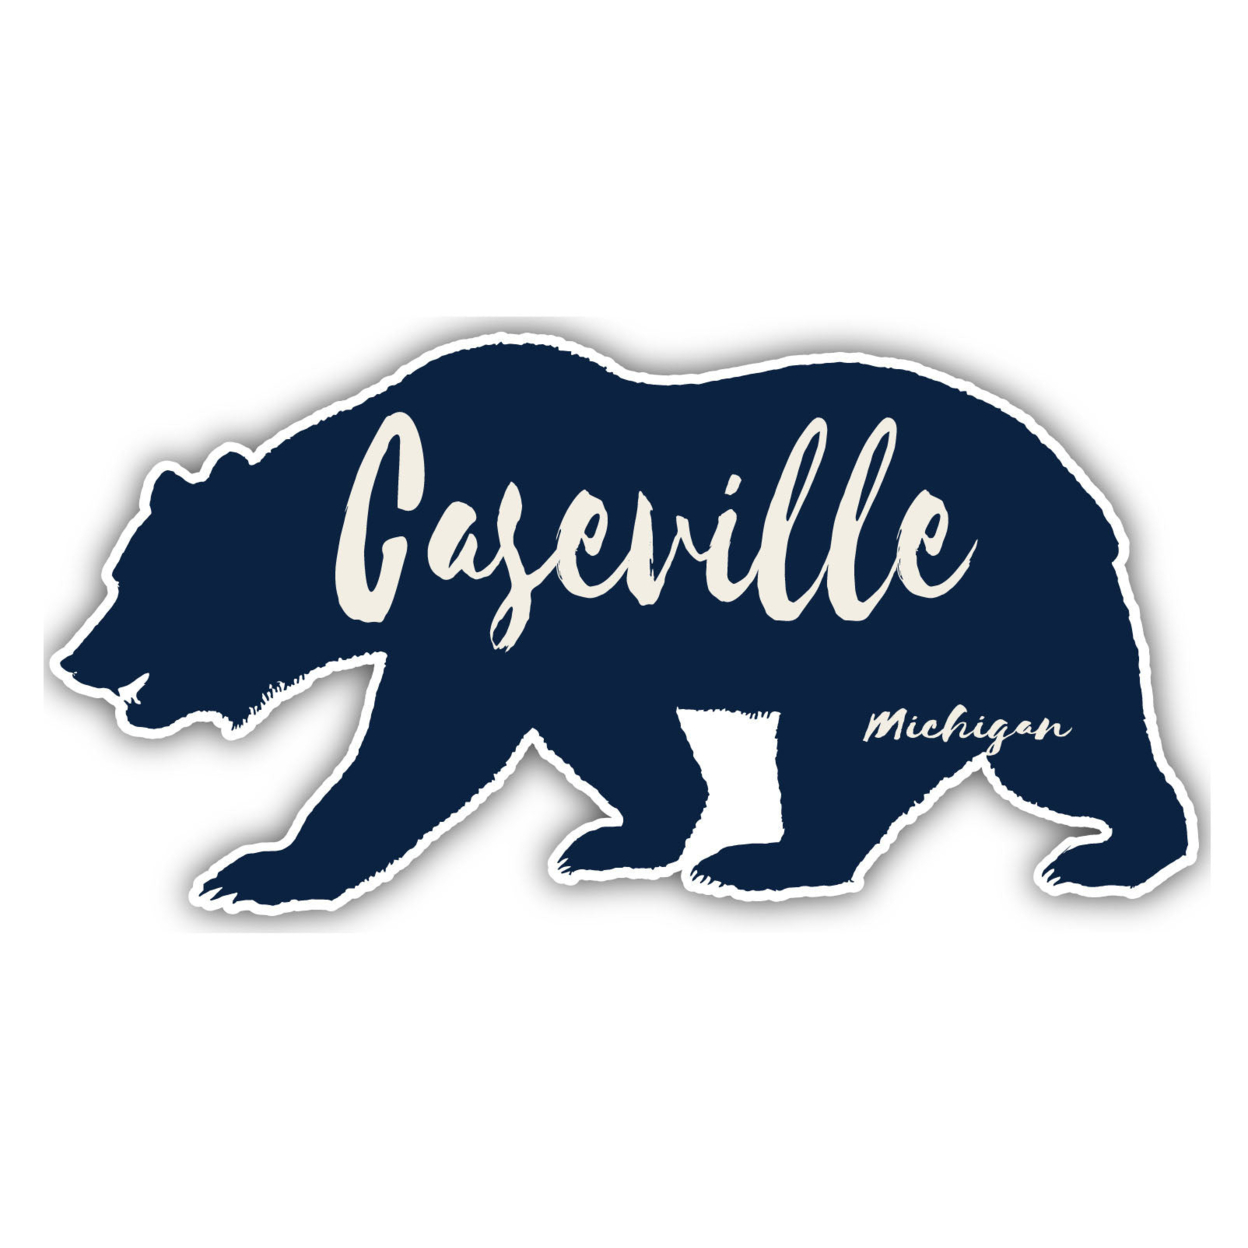 Caseville Michigan Souvenir Decorative Stickers (Choose Theme And Size) - Single Unit, 2-Inch, Bear